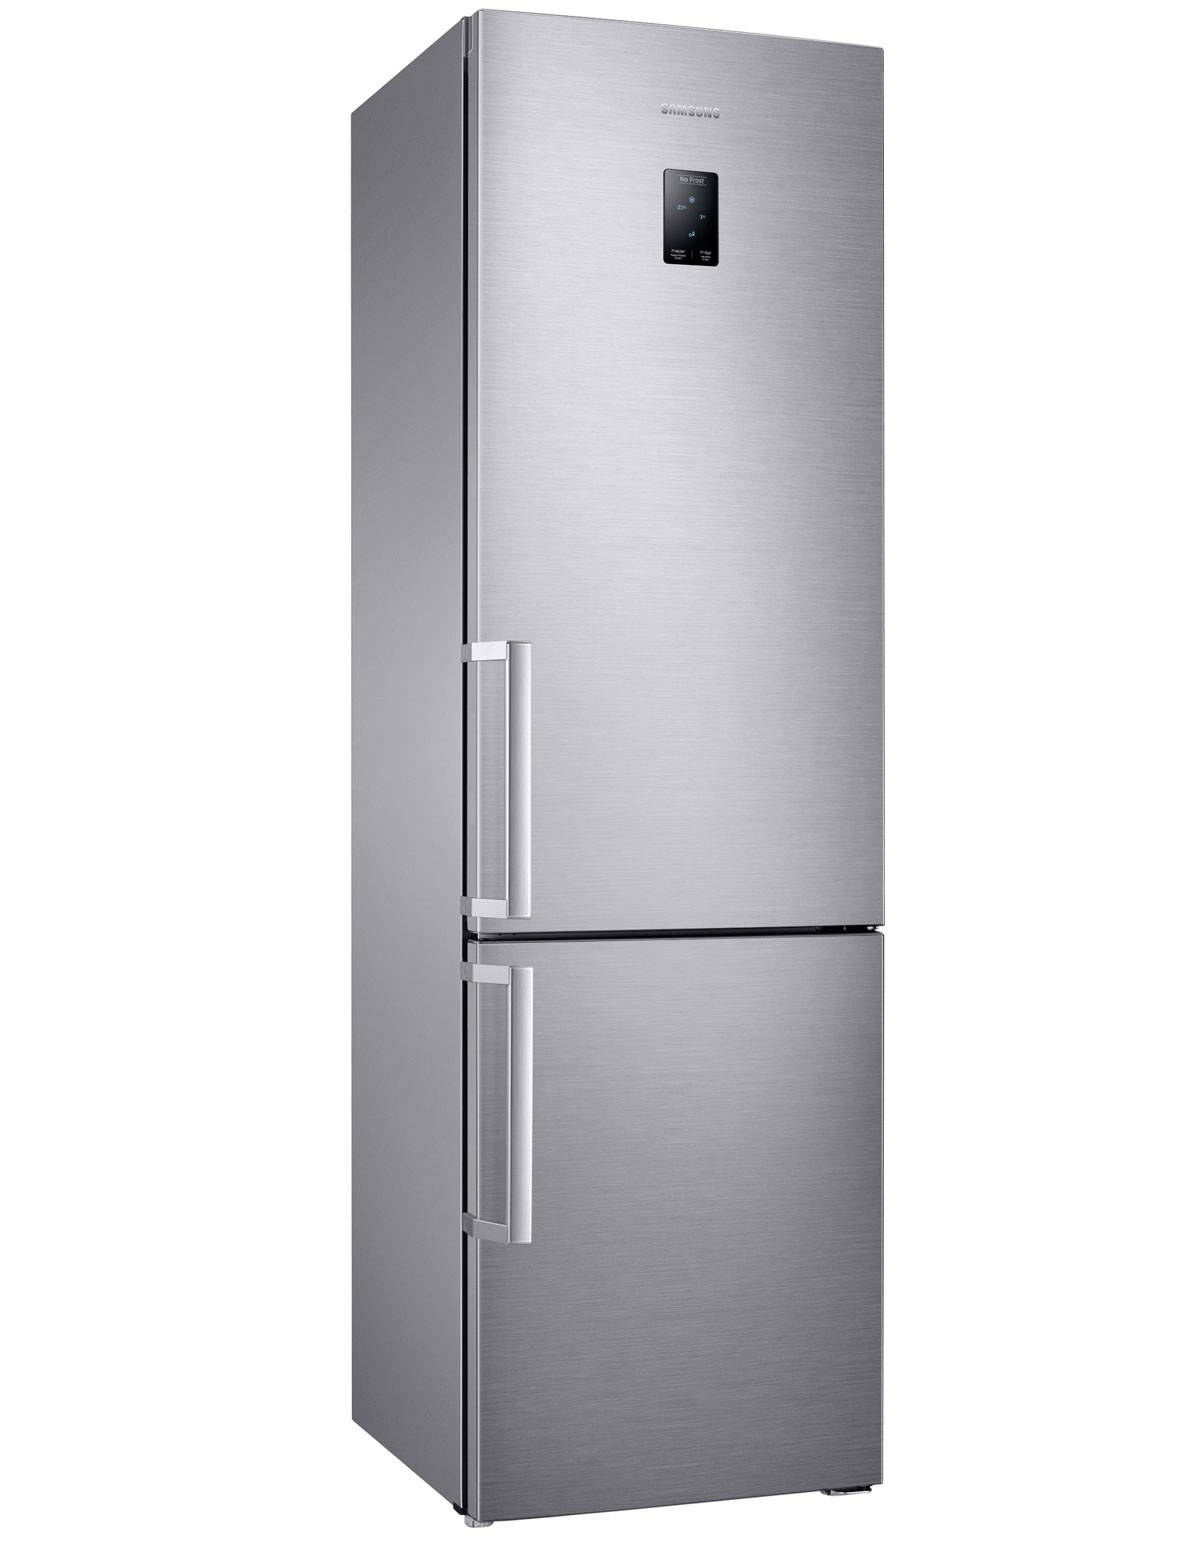 Samsung Refrigerator rb37j5925ss